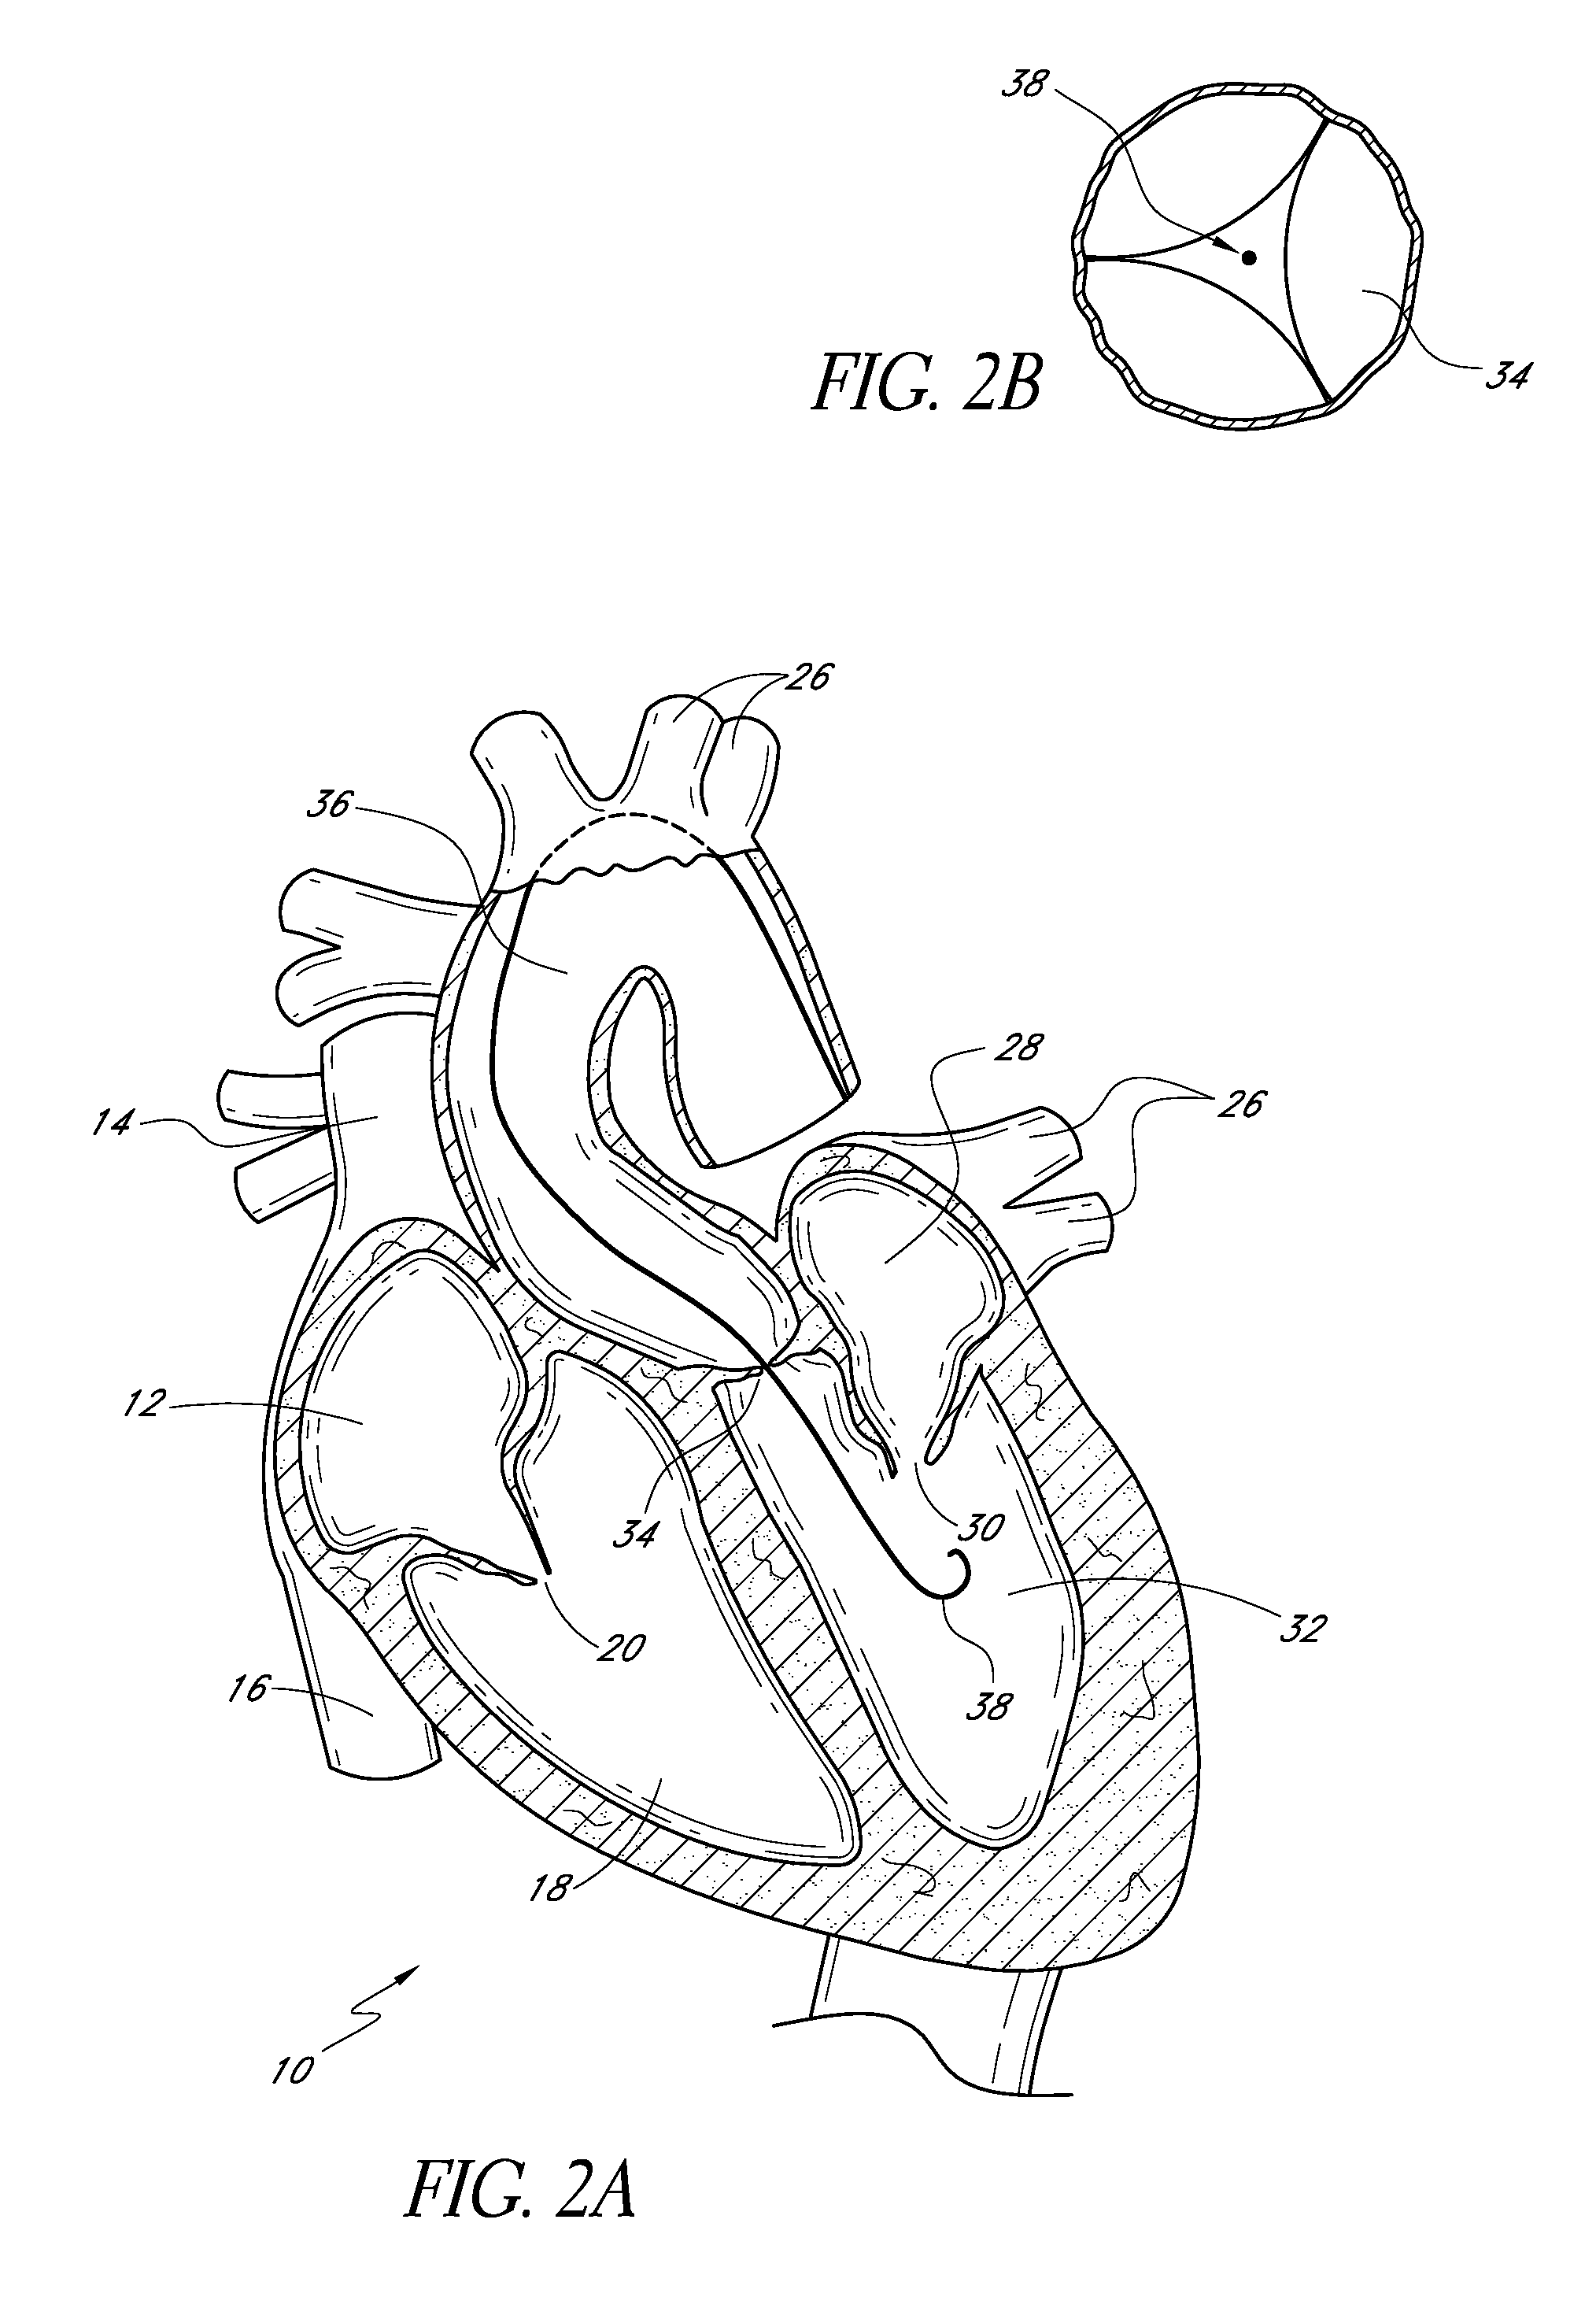 Catheter guidance through a calcified aortic valve